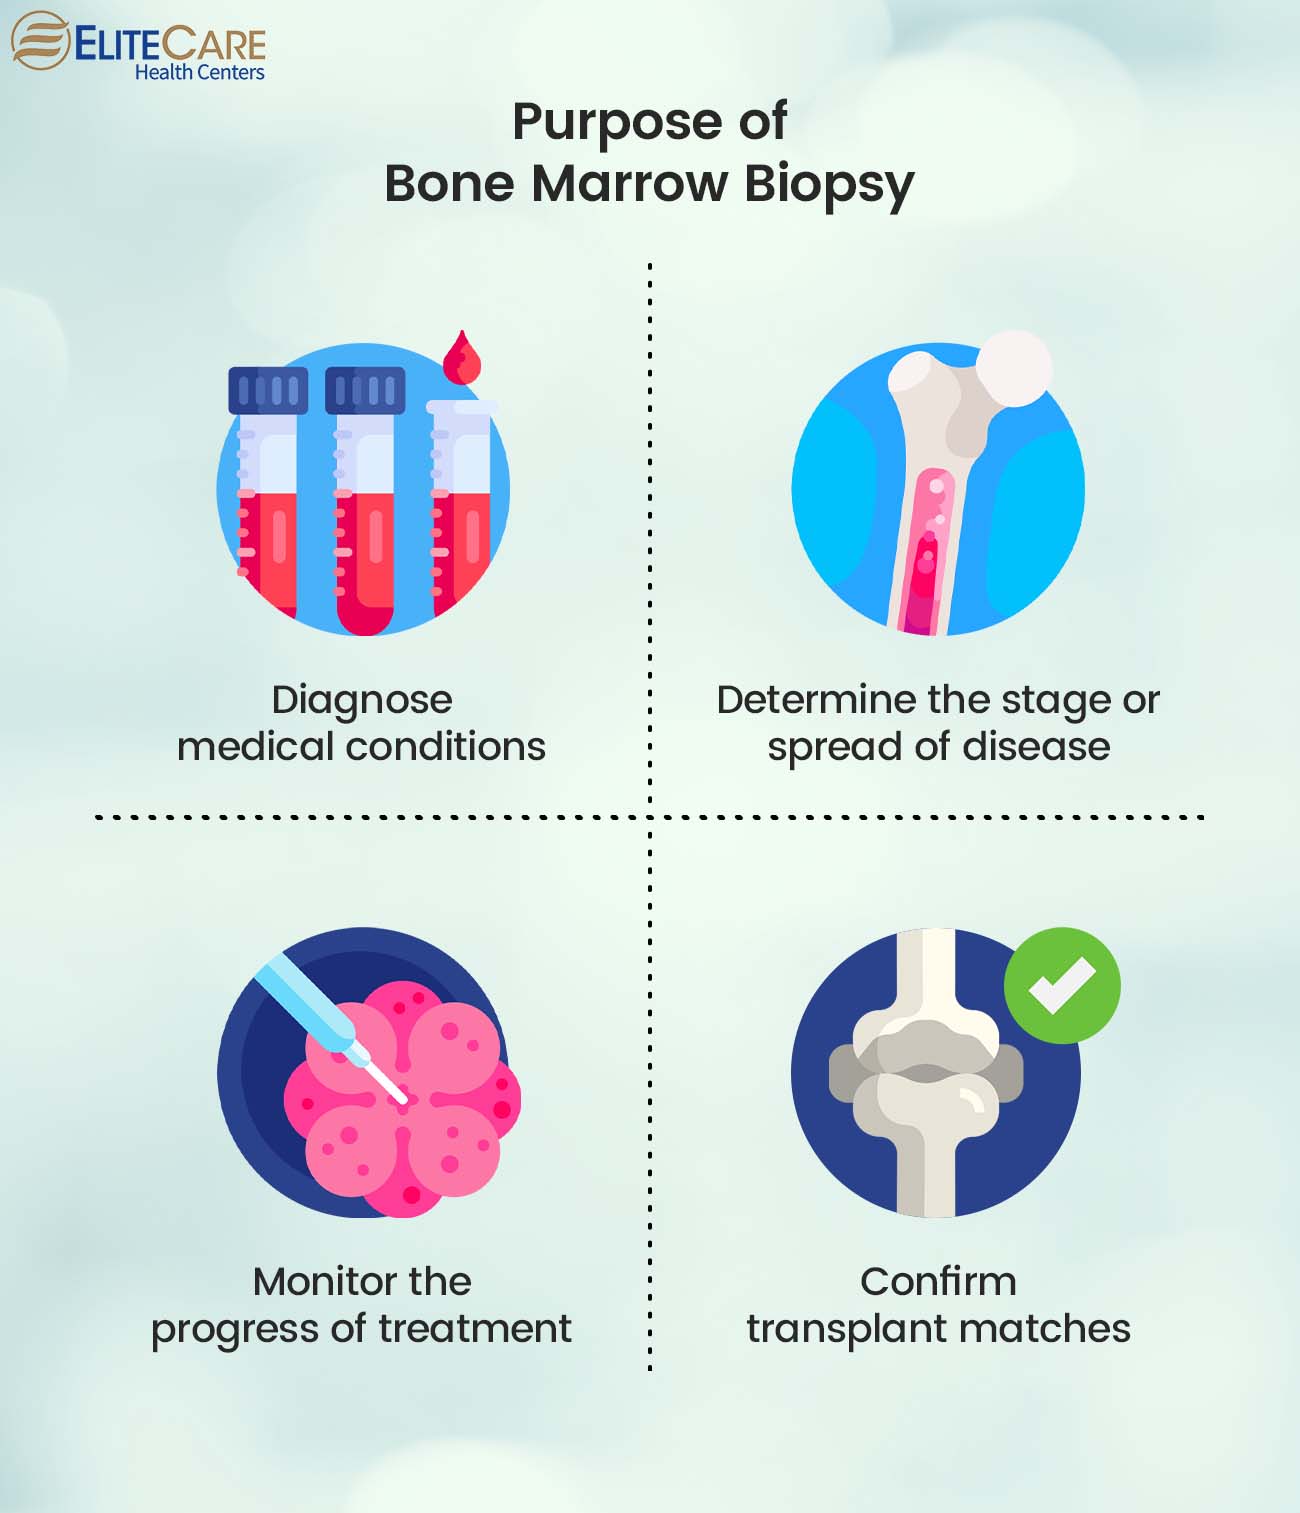 Purpose of Bone Marrow Biopsy